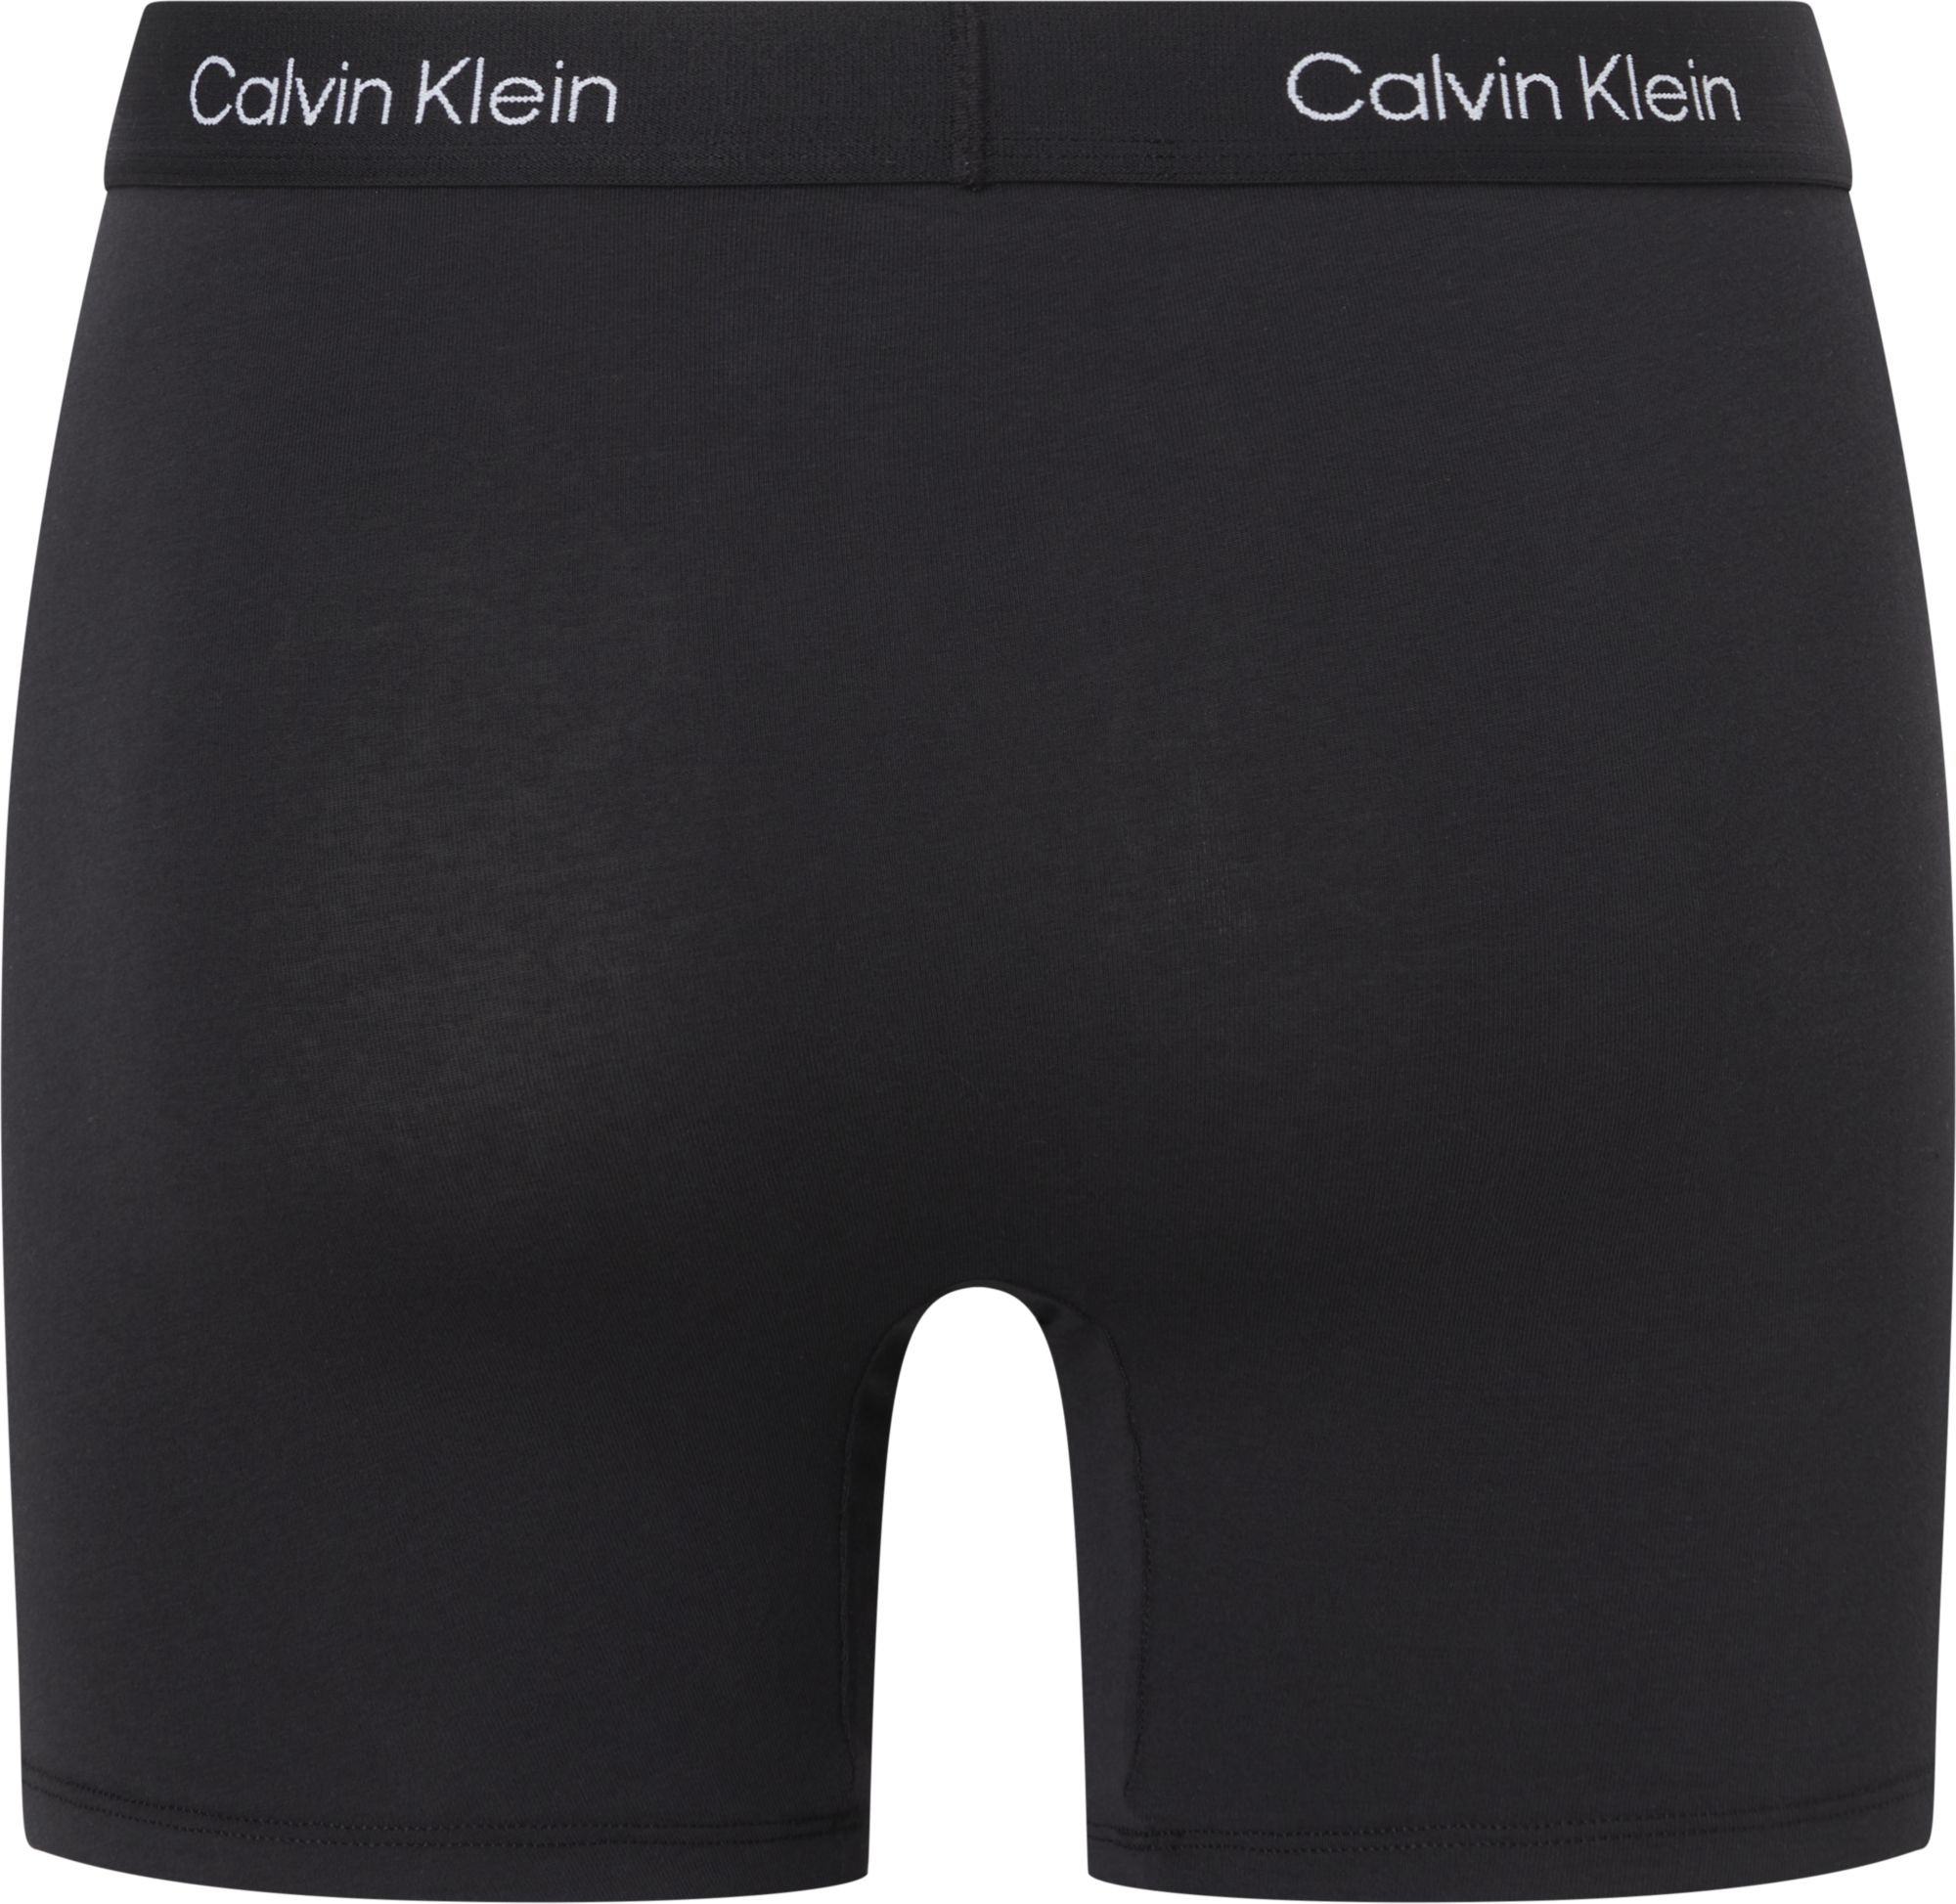 Spodní prádlo Pánské spodní prádlo Spodní díl BOXER BRIEF model 18770172 S - Calvin Klein